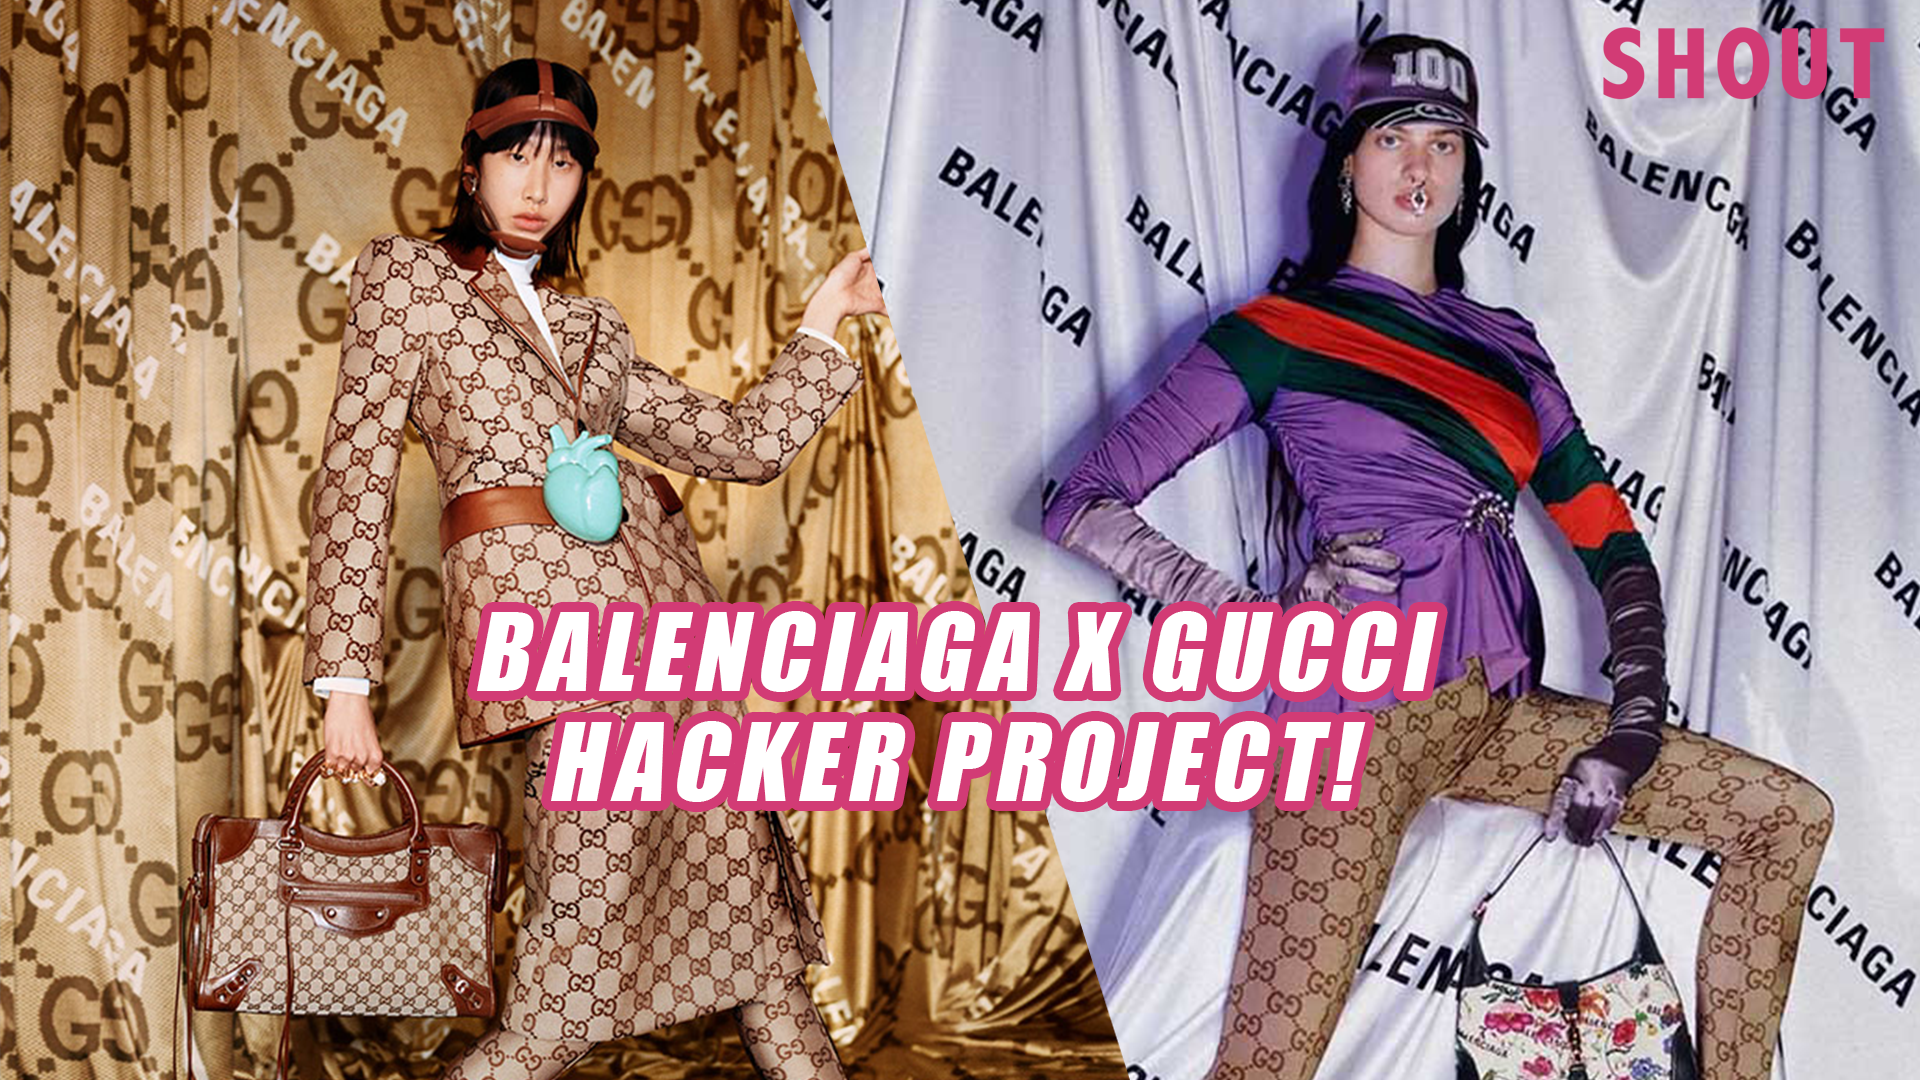 Gucci x Balenciaga Cream Floral Print Leather The Hacker Project